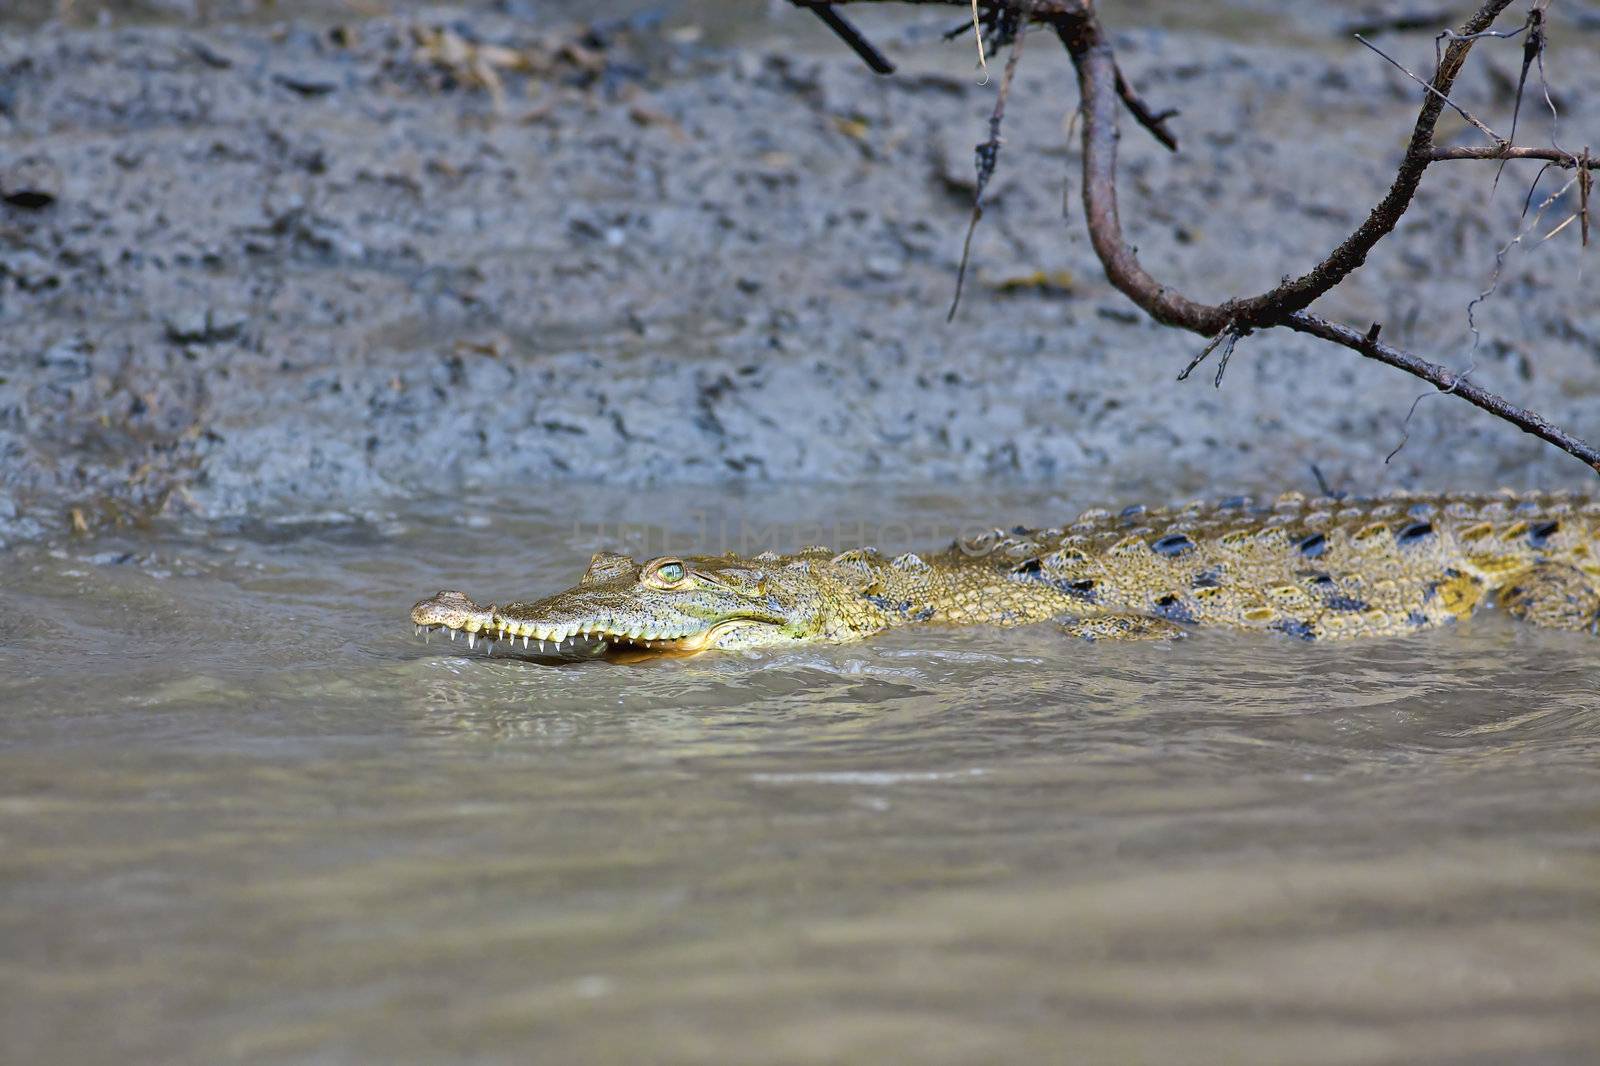 Baby Crocodile in the water by kjorgen